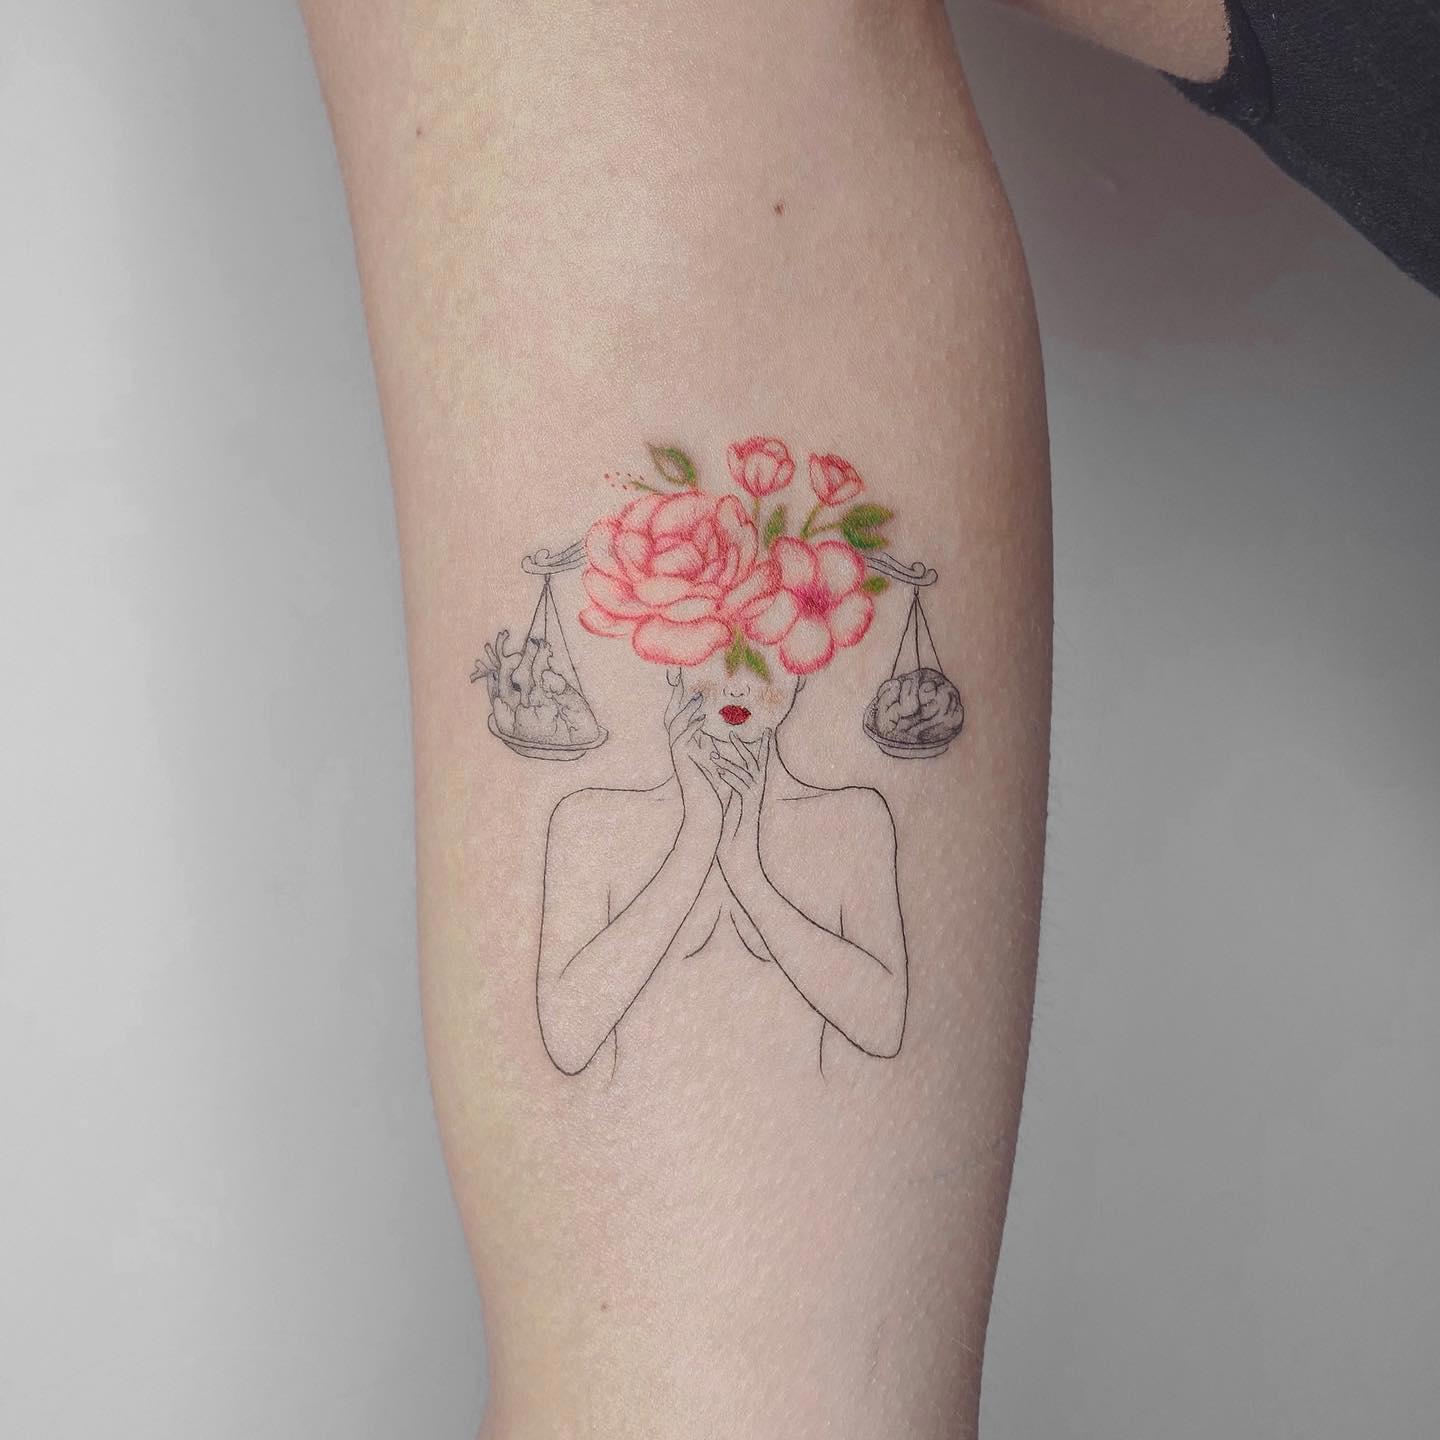 Tatuaje de flores con mucho simbolismo